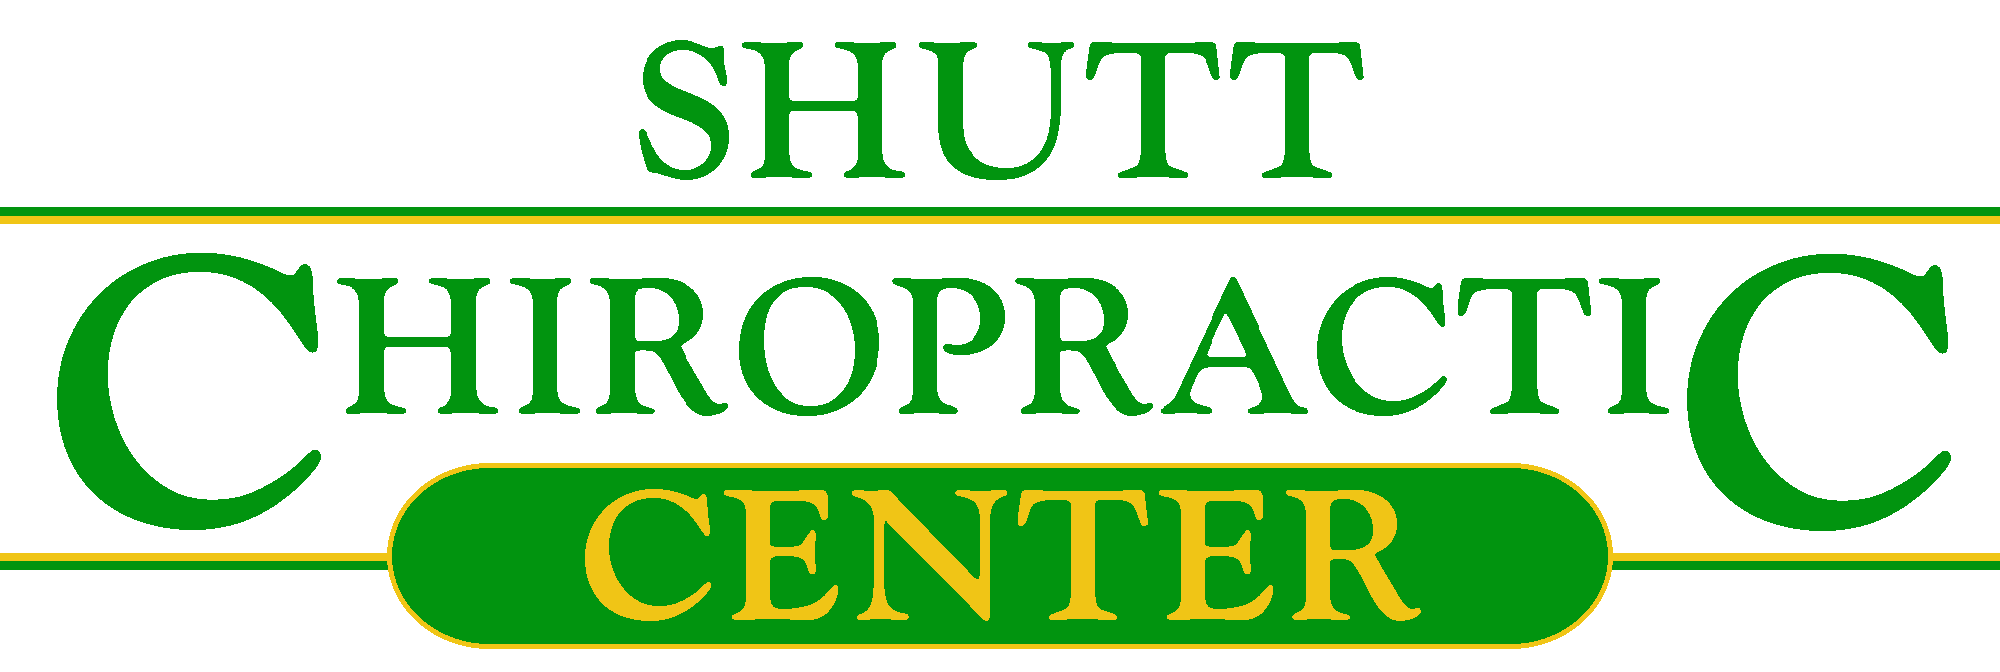 Shutt Chiropractic Center